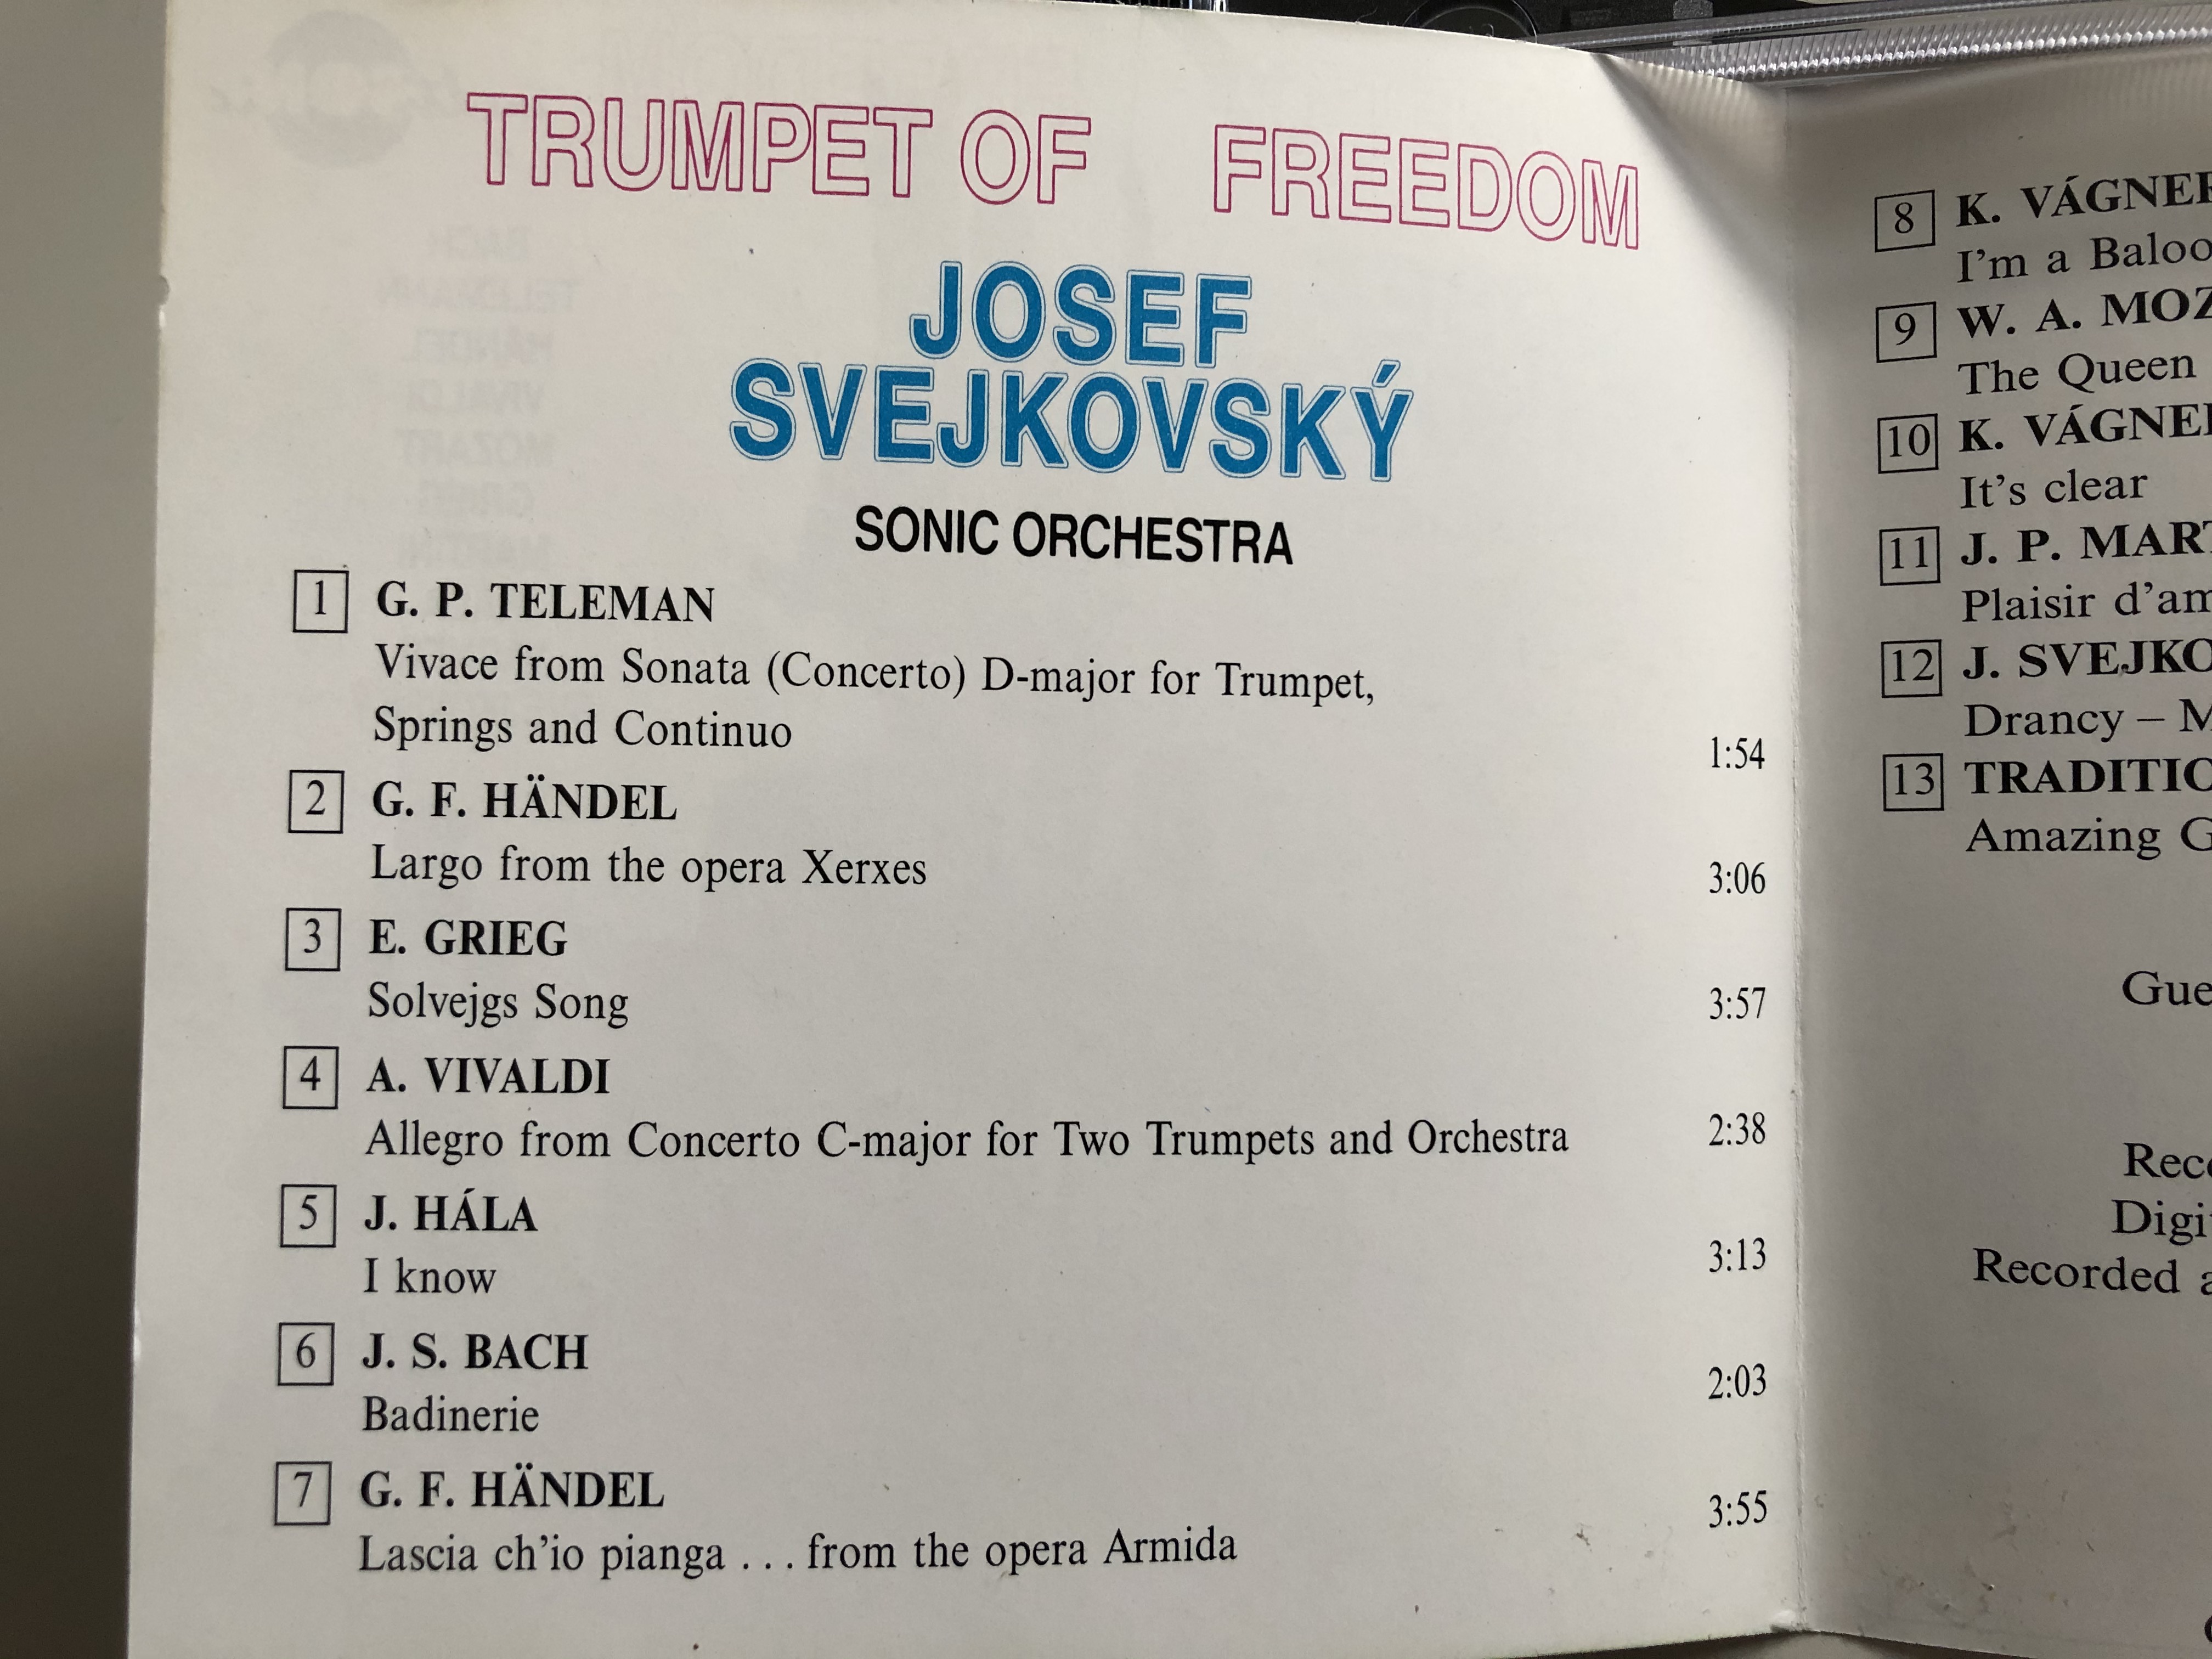 trumpet-of-freedom-josef-svejkovsk-sonic-orchestra-bach-telemann-handel-vivaldi-mozart-grieg-martini-hala-vagner-svejkovsky-multisonic-audio-cd-1990-stereo-31-0006-2-131-2-.jpg